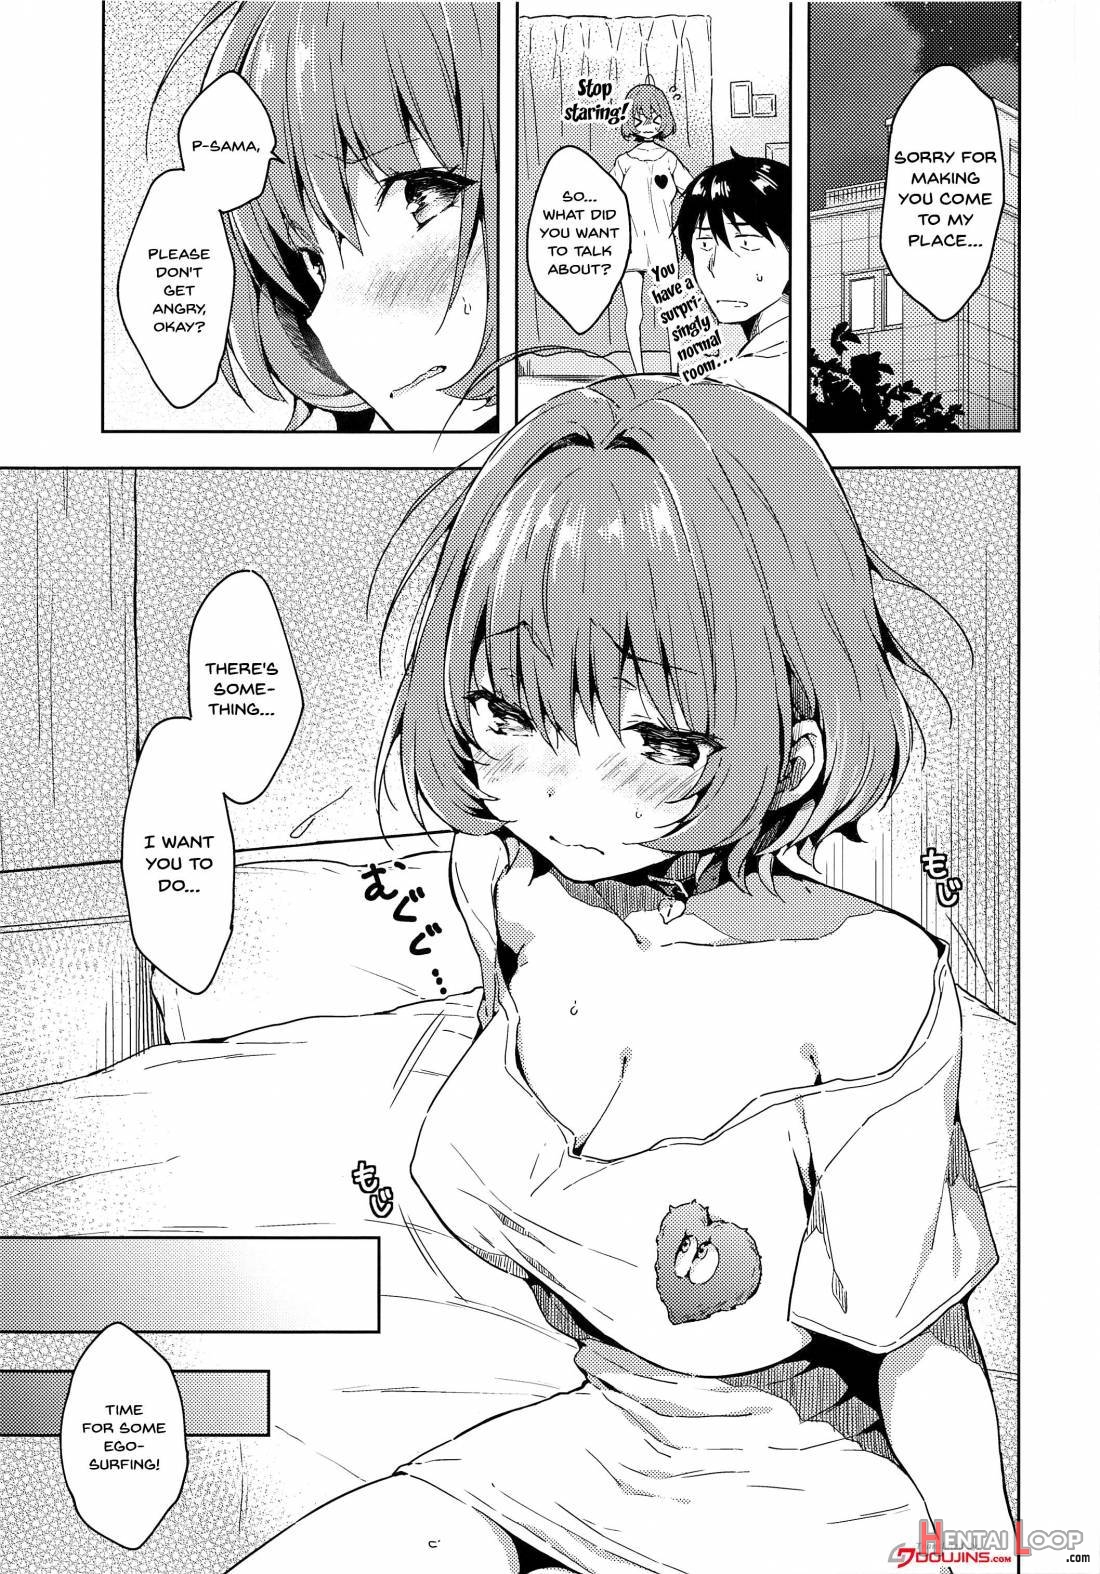 Riamu-chan Shoumei Sex page 2